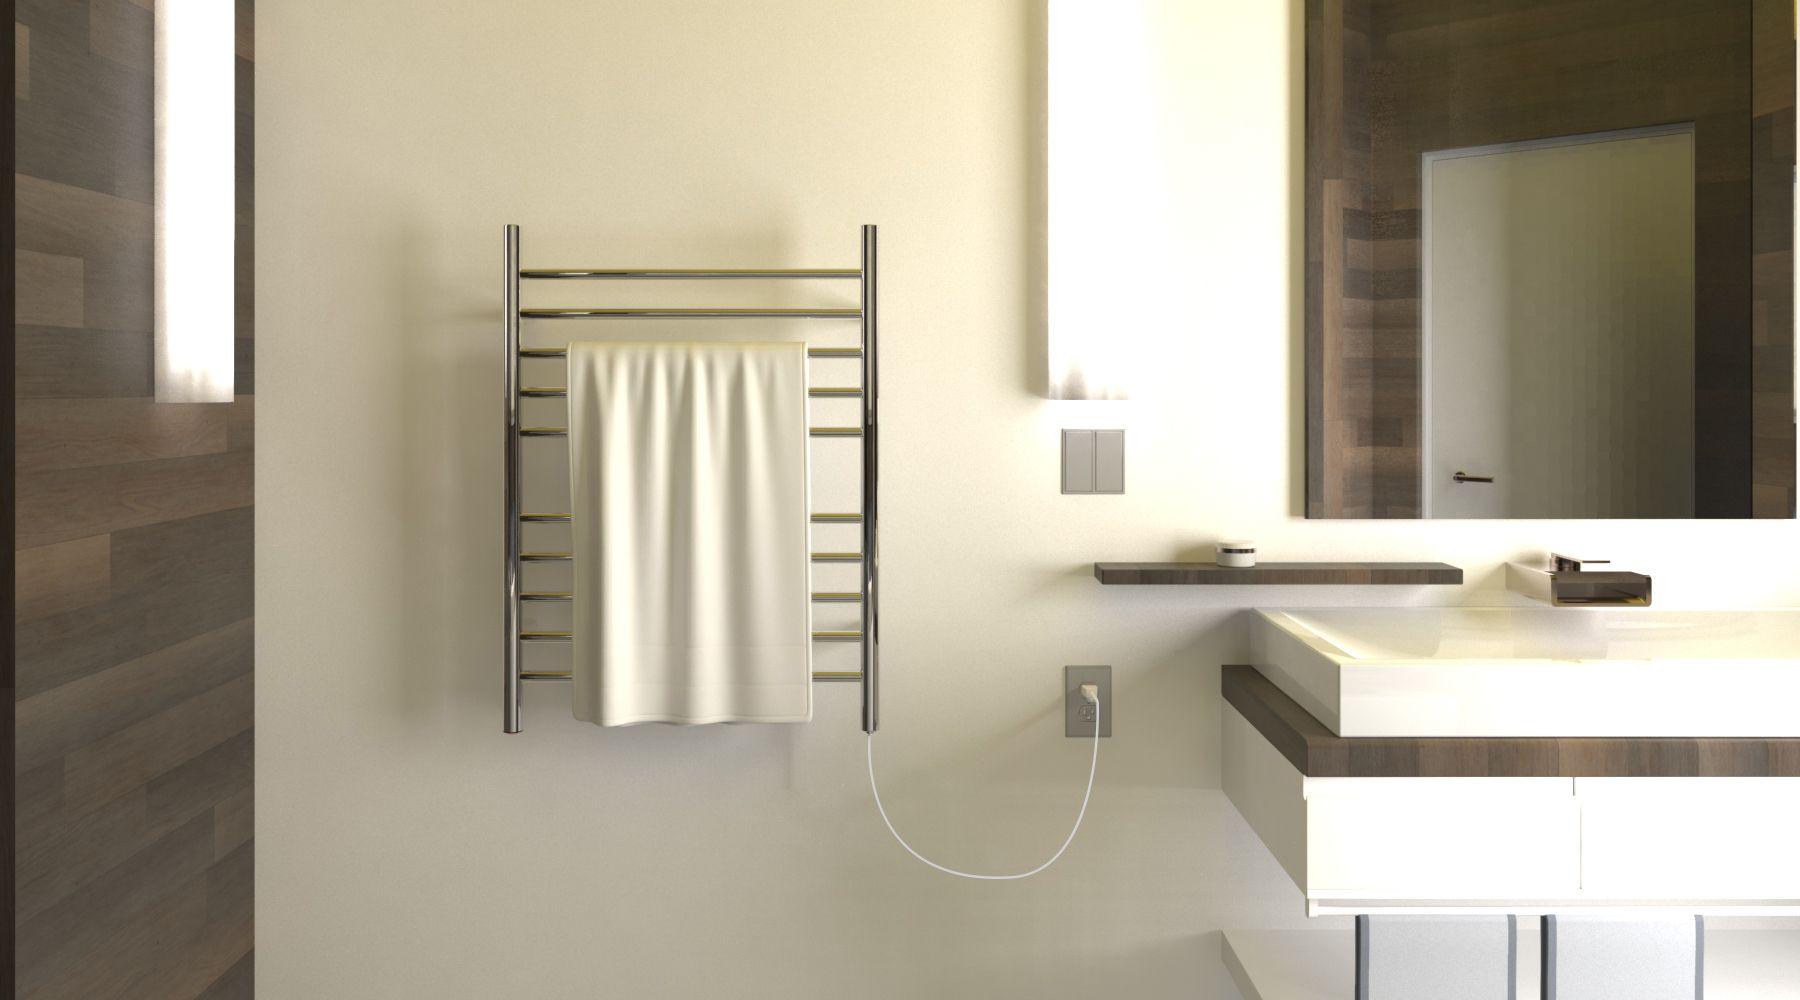 Amba Radiant Straight Plug-in Towel Warmer - 23.75"w x 31.5"h - towelwarmers